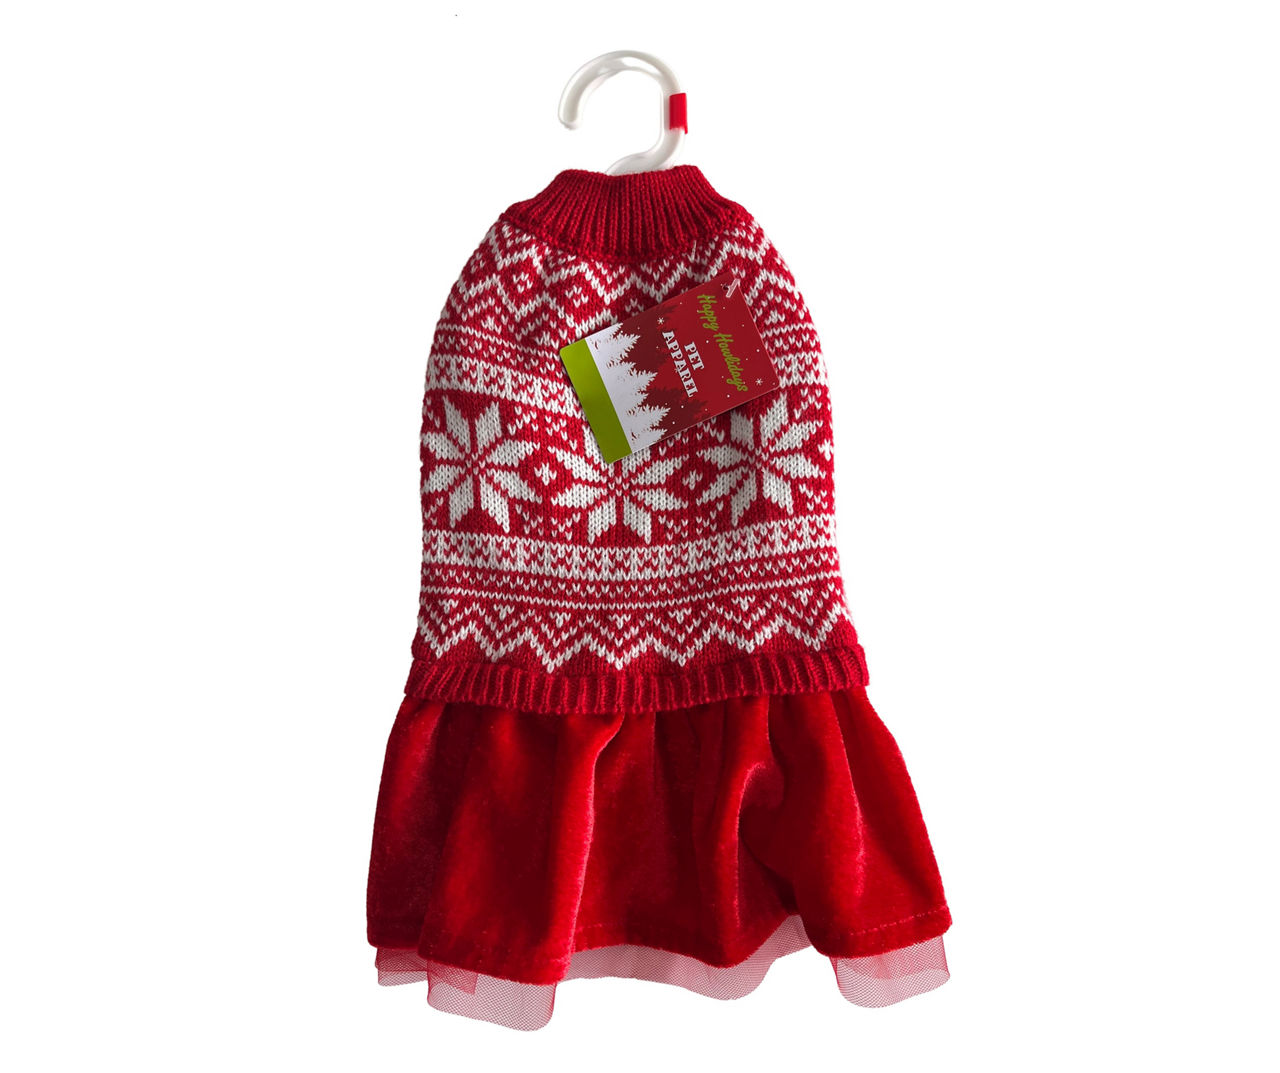 Pet X-Small Red & White Snowflake Fair Isle Sweater Dress